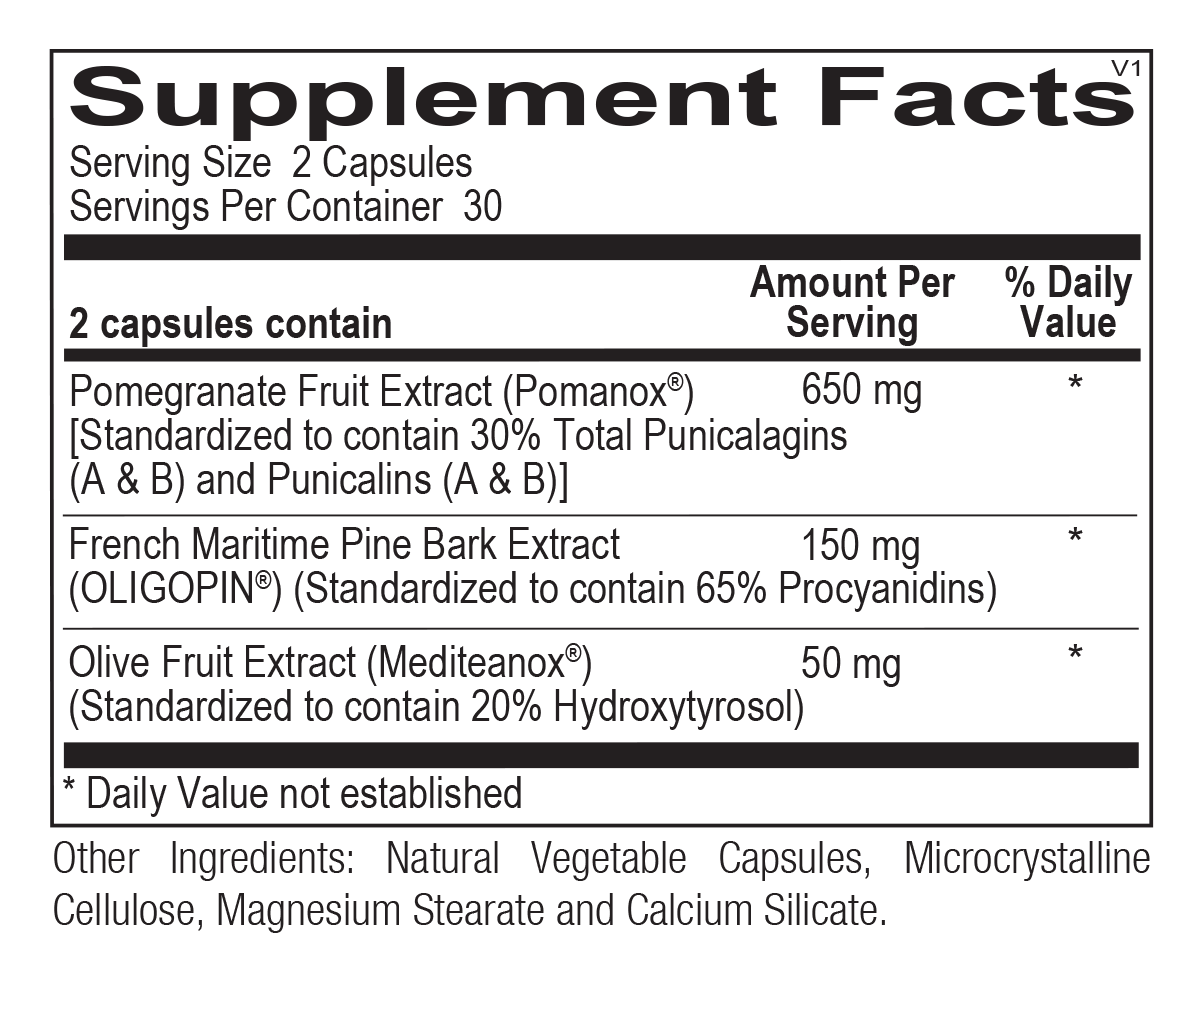 Ortho Molecular Lipitrol OX 60 Caps supplement facts. Photo of the supplement facts from the Ortho Molecular Lipitrol OX bottle.